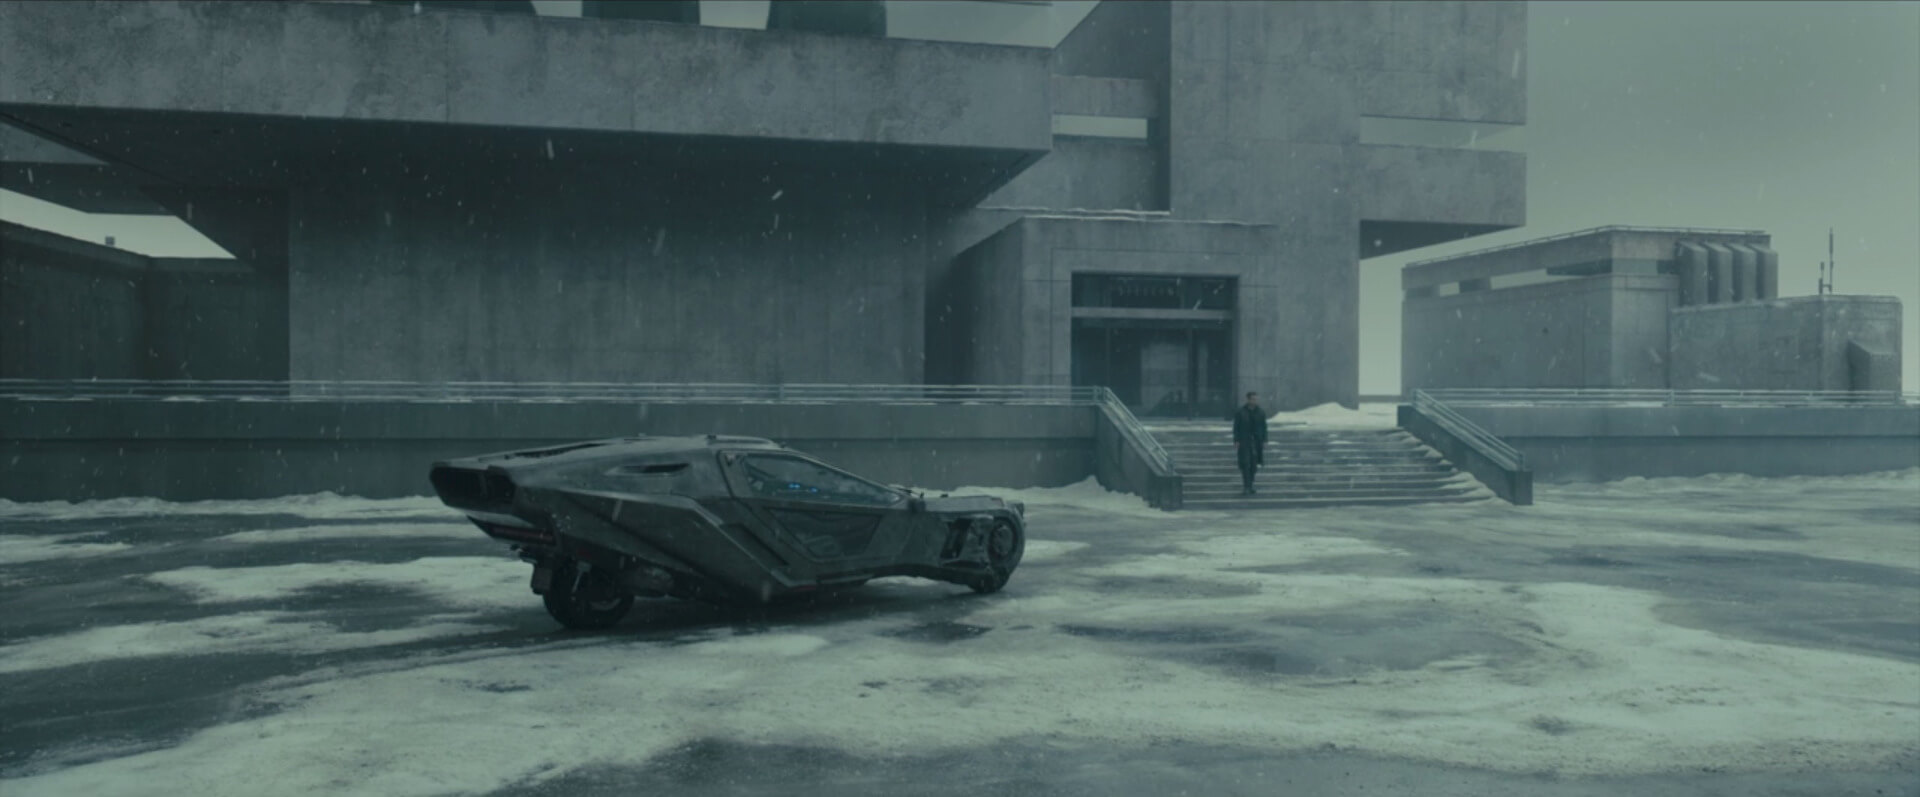 Blade Runner set design · The cinematography of Blade Runner